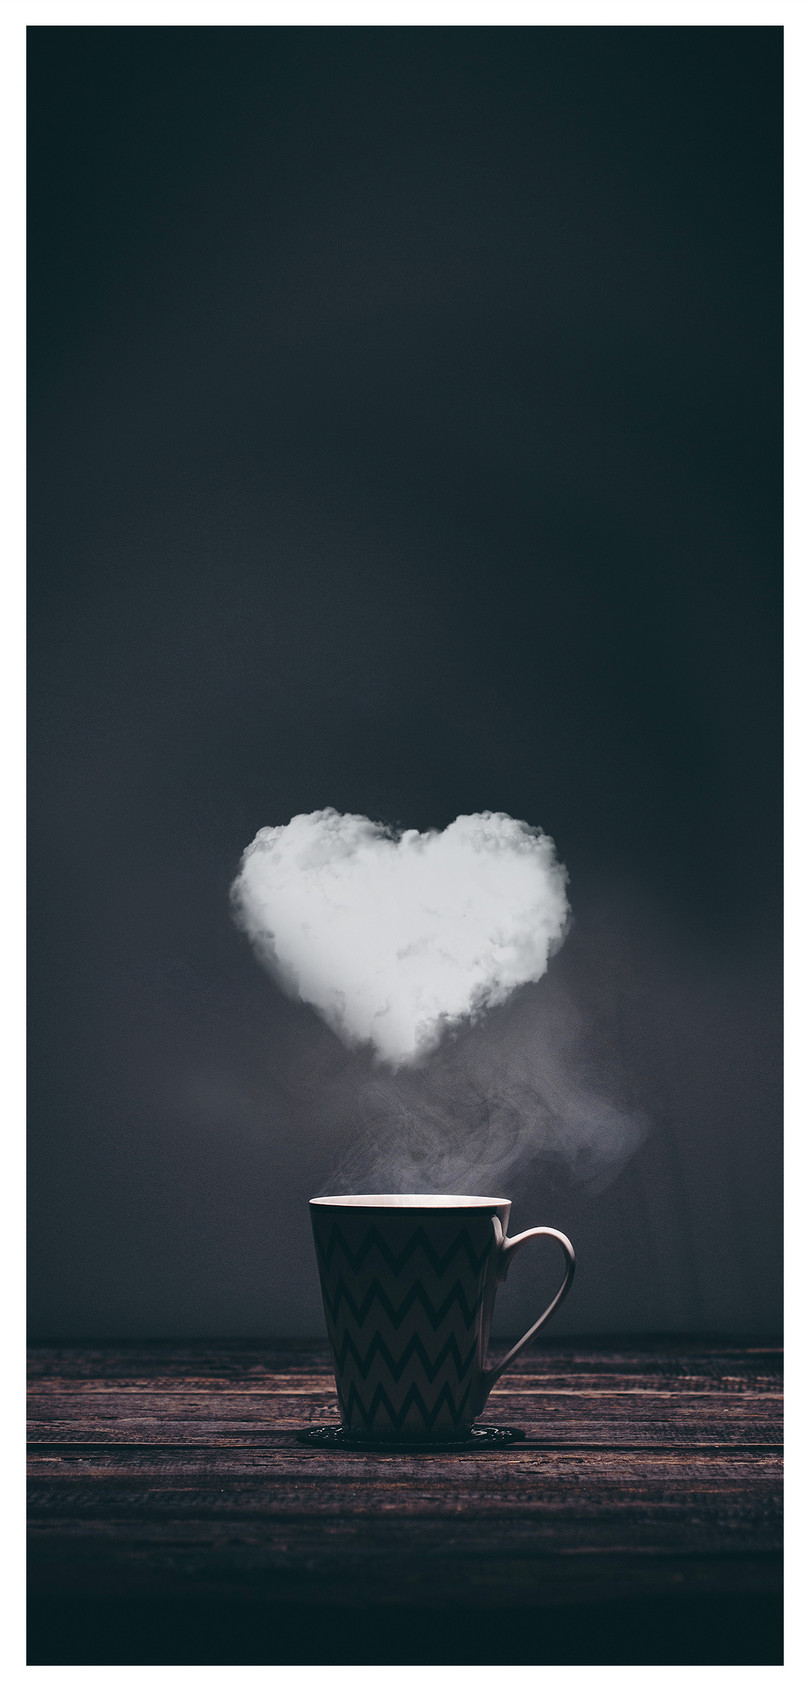 Wallpaper Ponsel Romantis Yang Kreatif - Coffee Cup - HD Wallpaper 